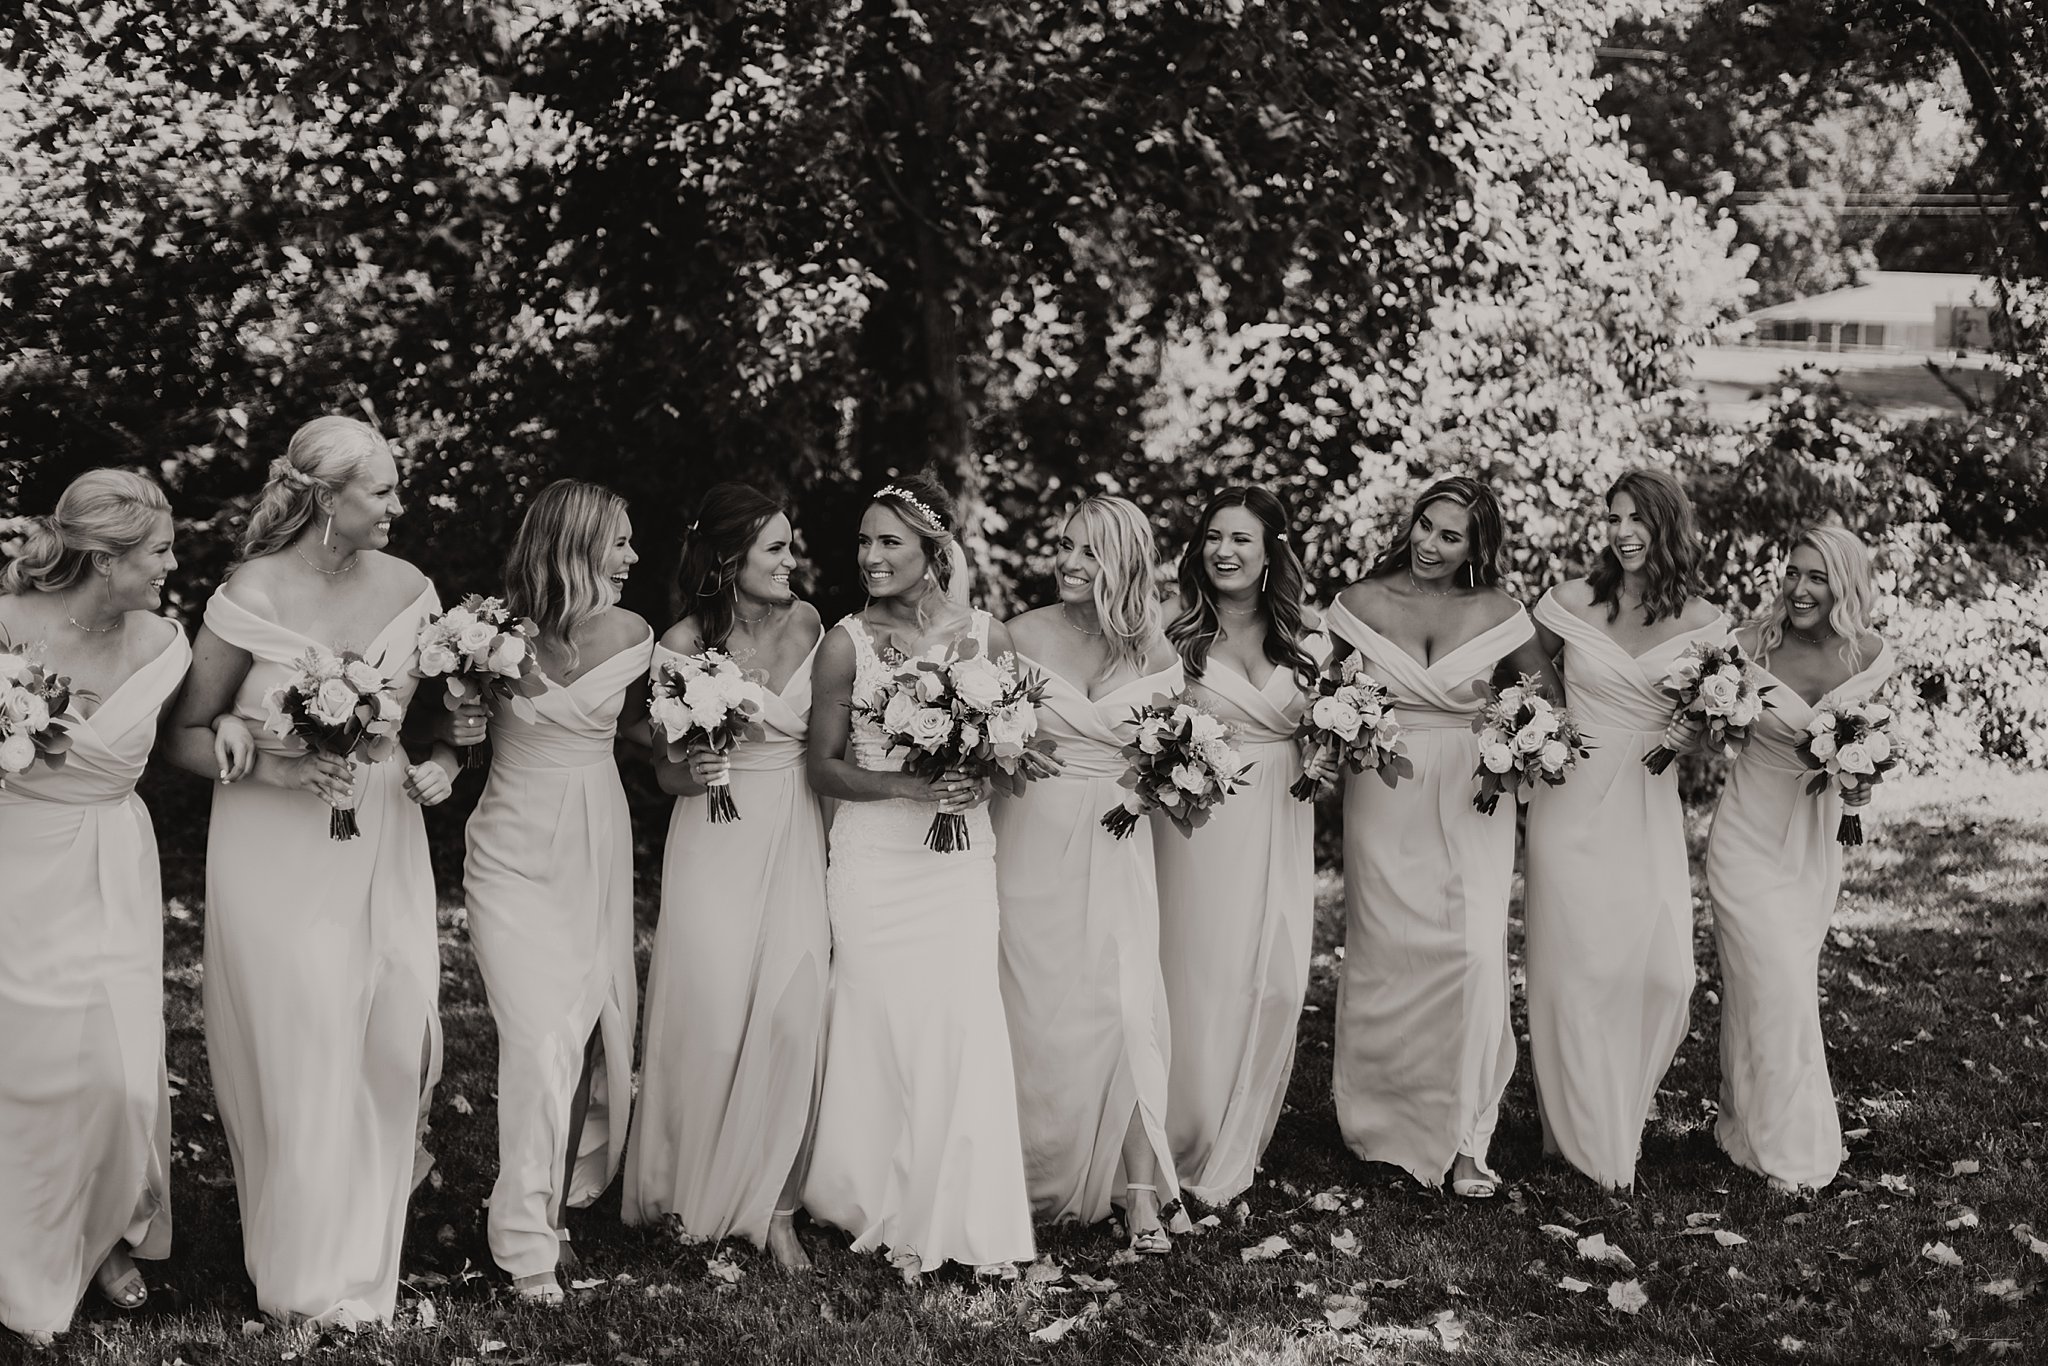 Blush Bridesmaids Dresses | St. Louis Wedding